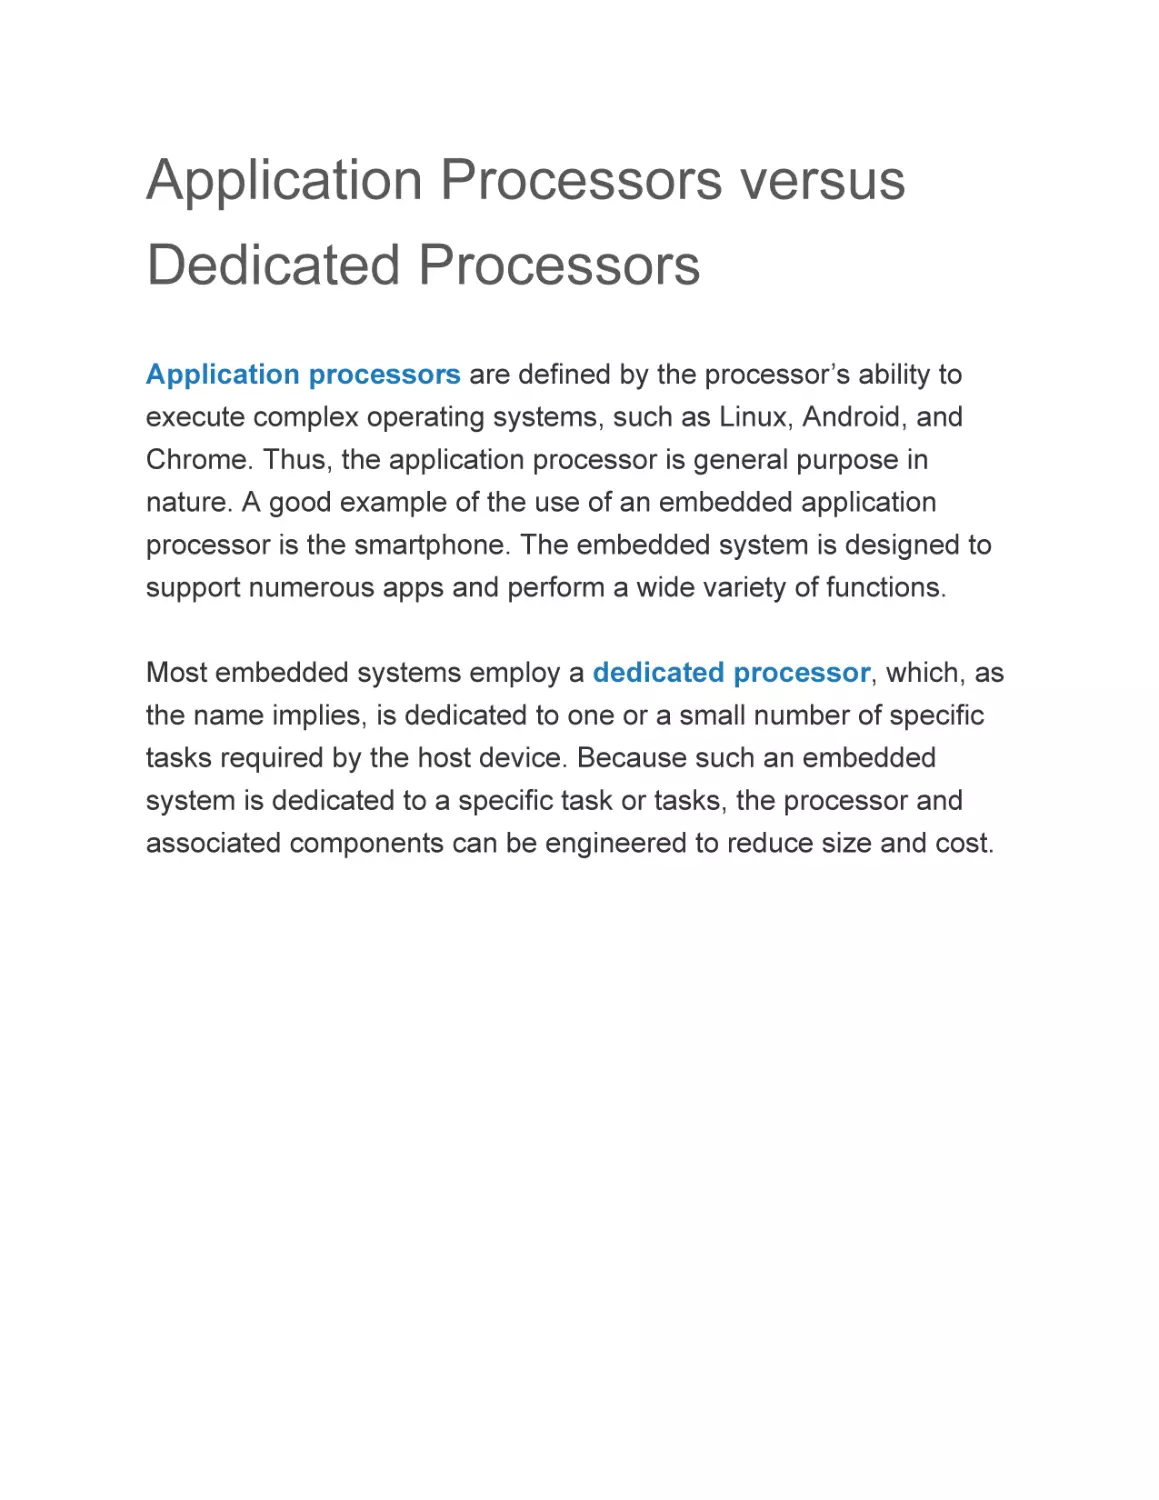 Application Processors versus Dedicated Processors